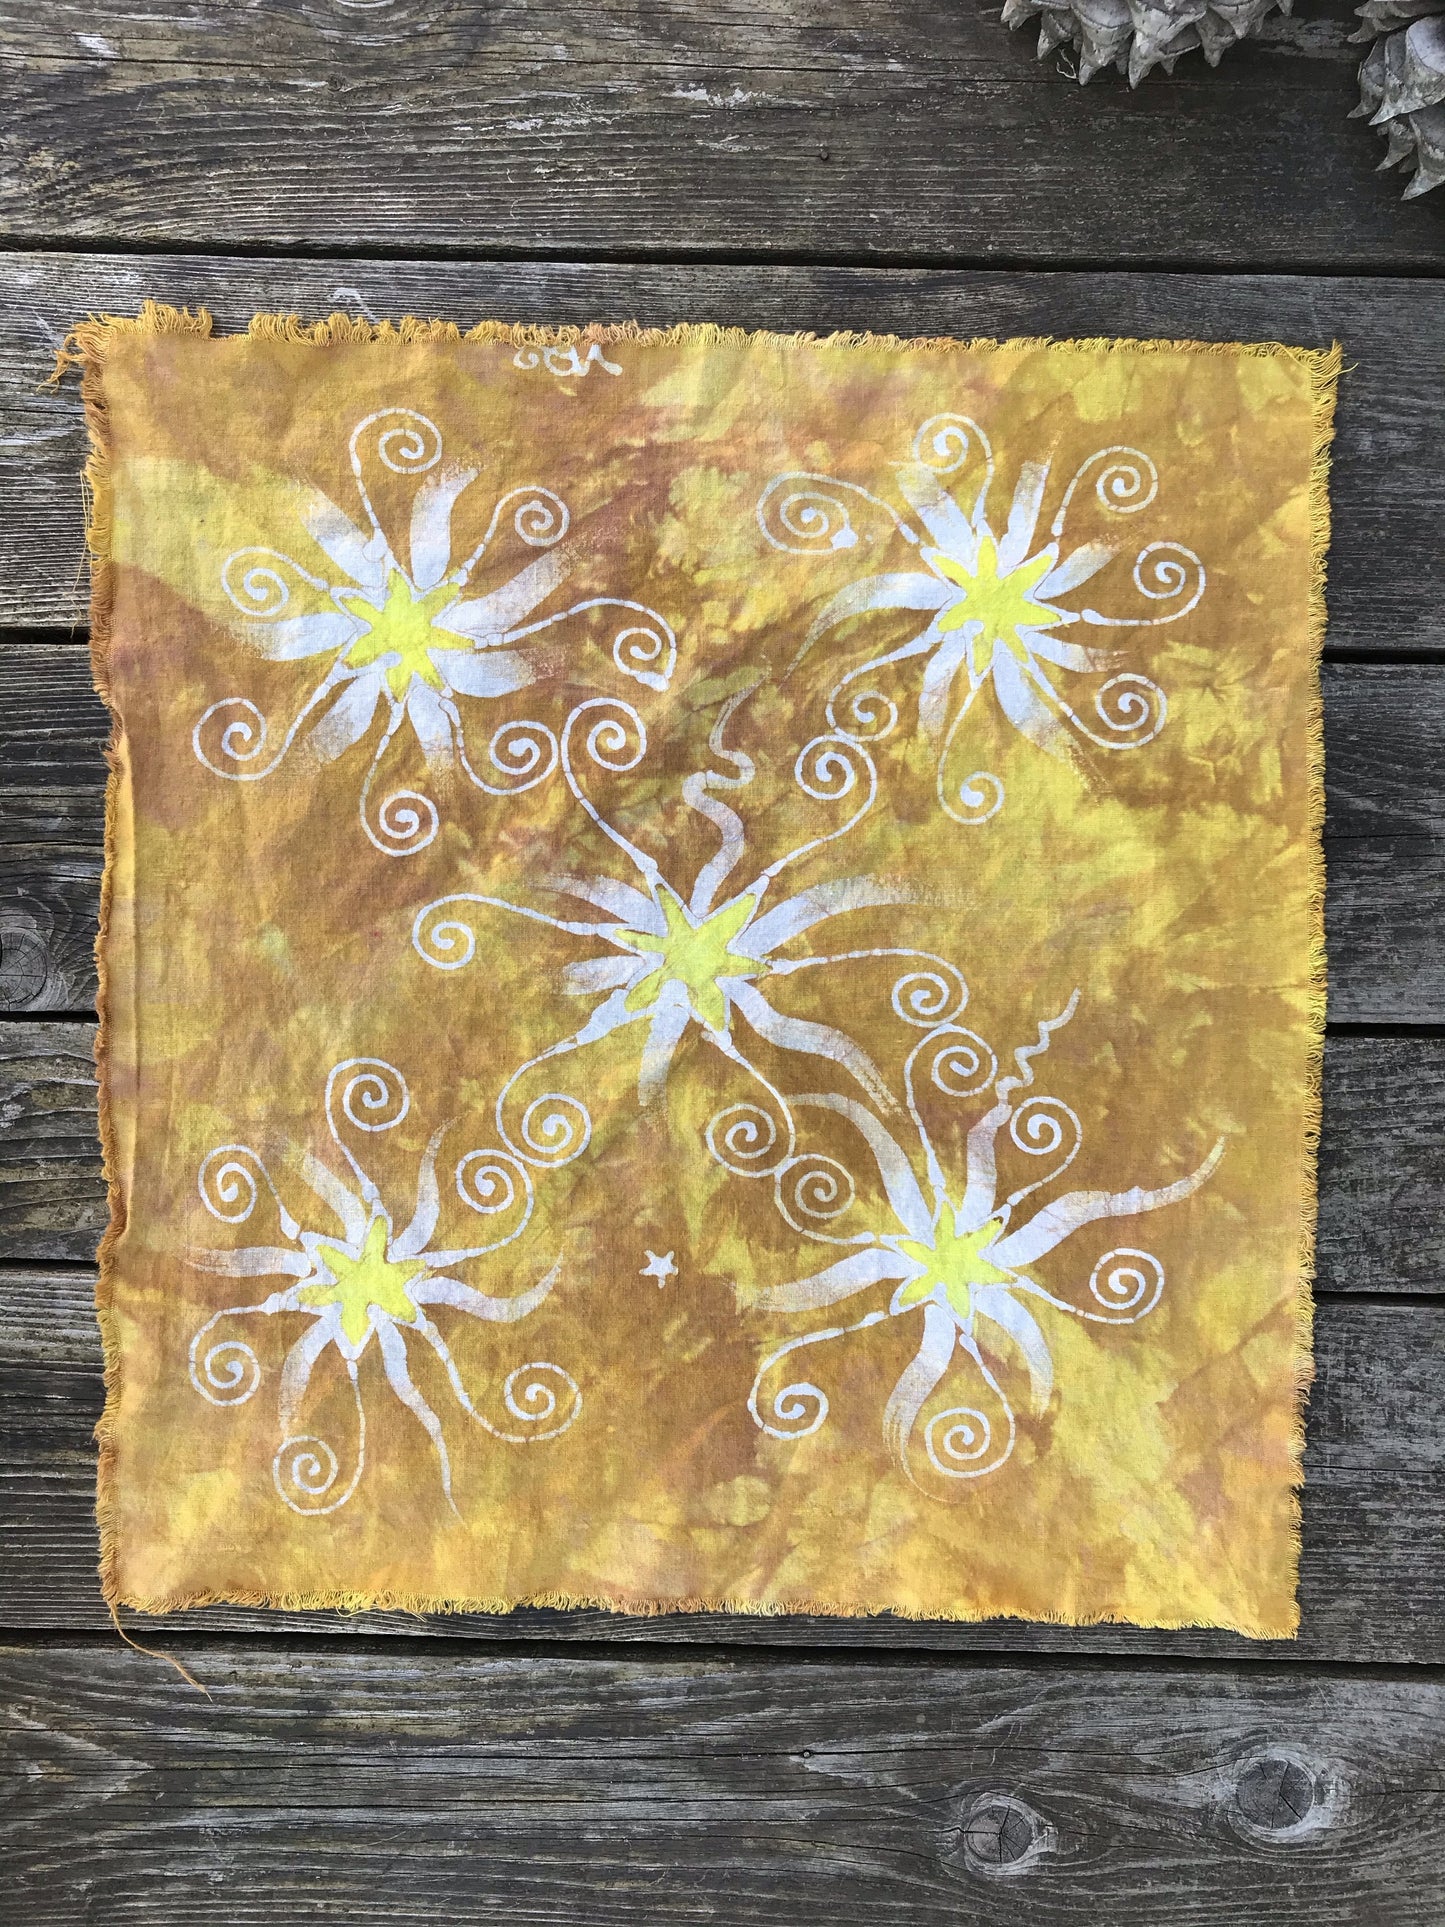 Sunshine Star Batik Bandana - Hand Painted Cotton Fabric Square scarf batikwalla 